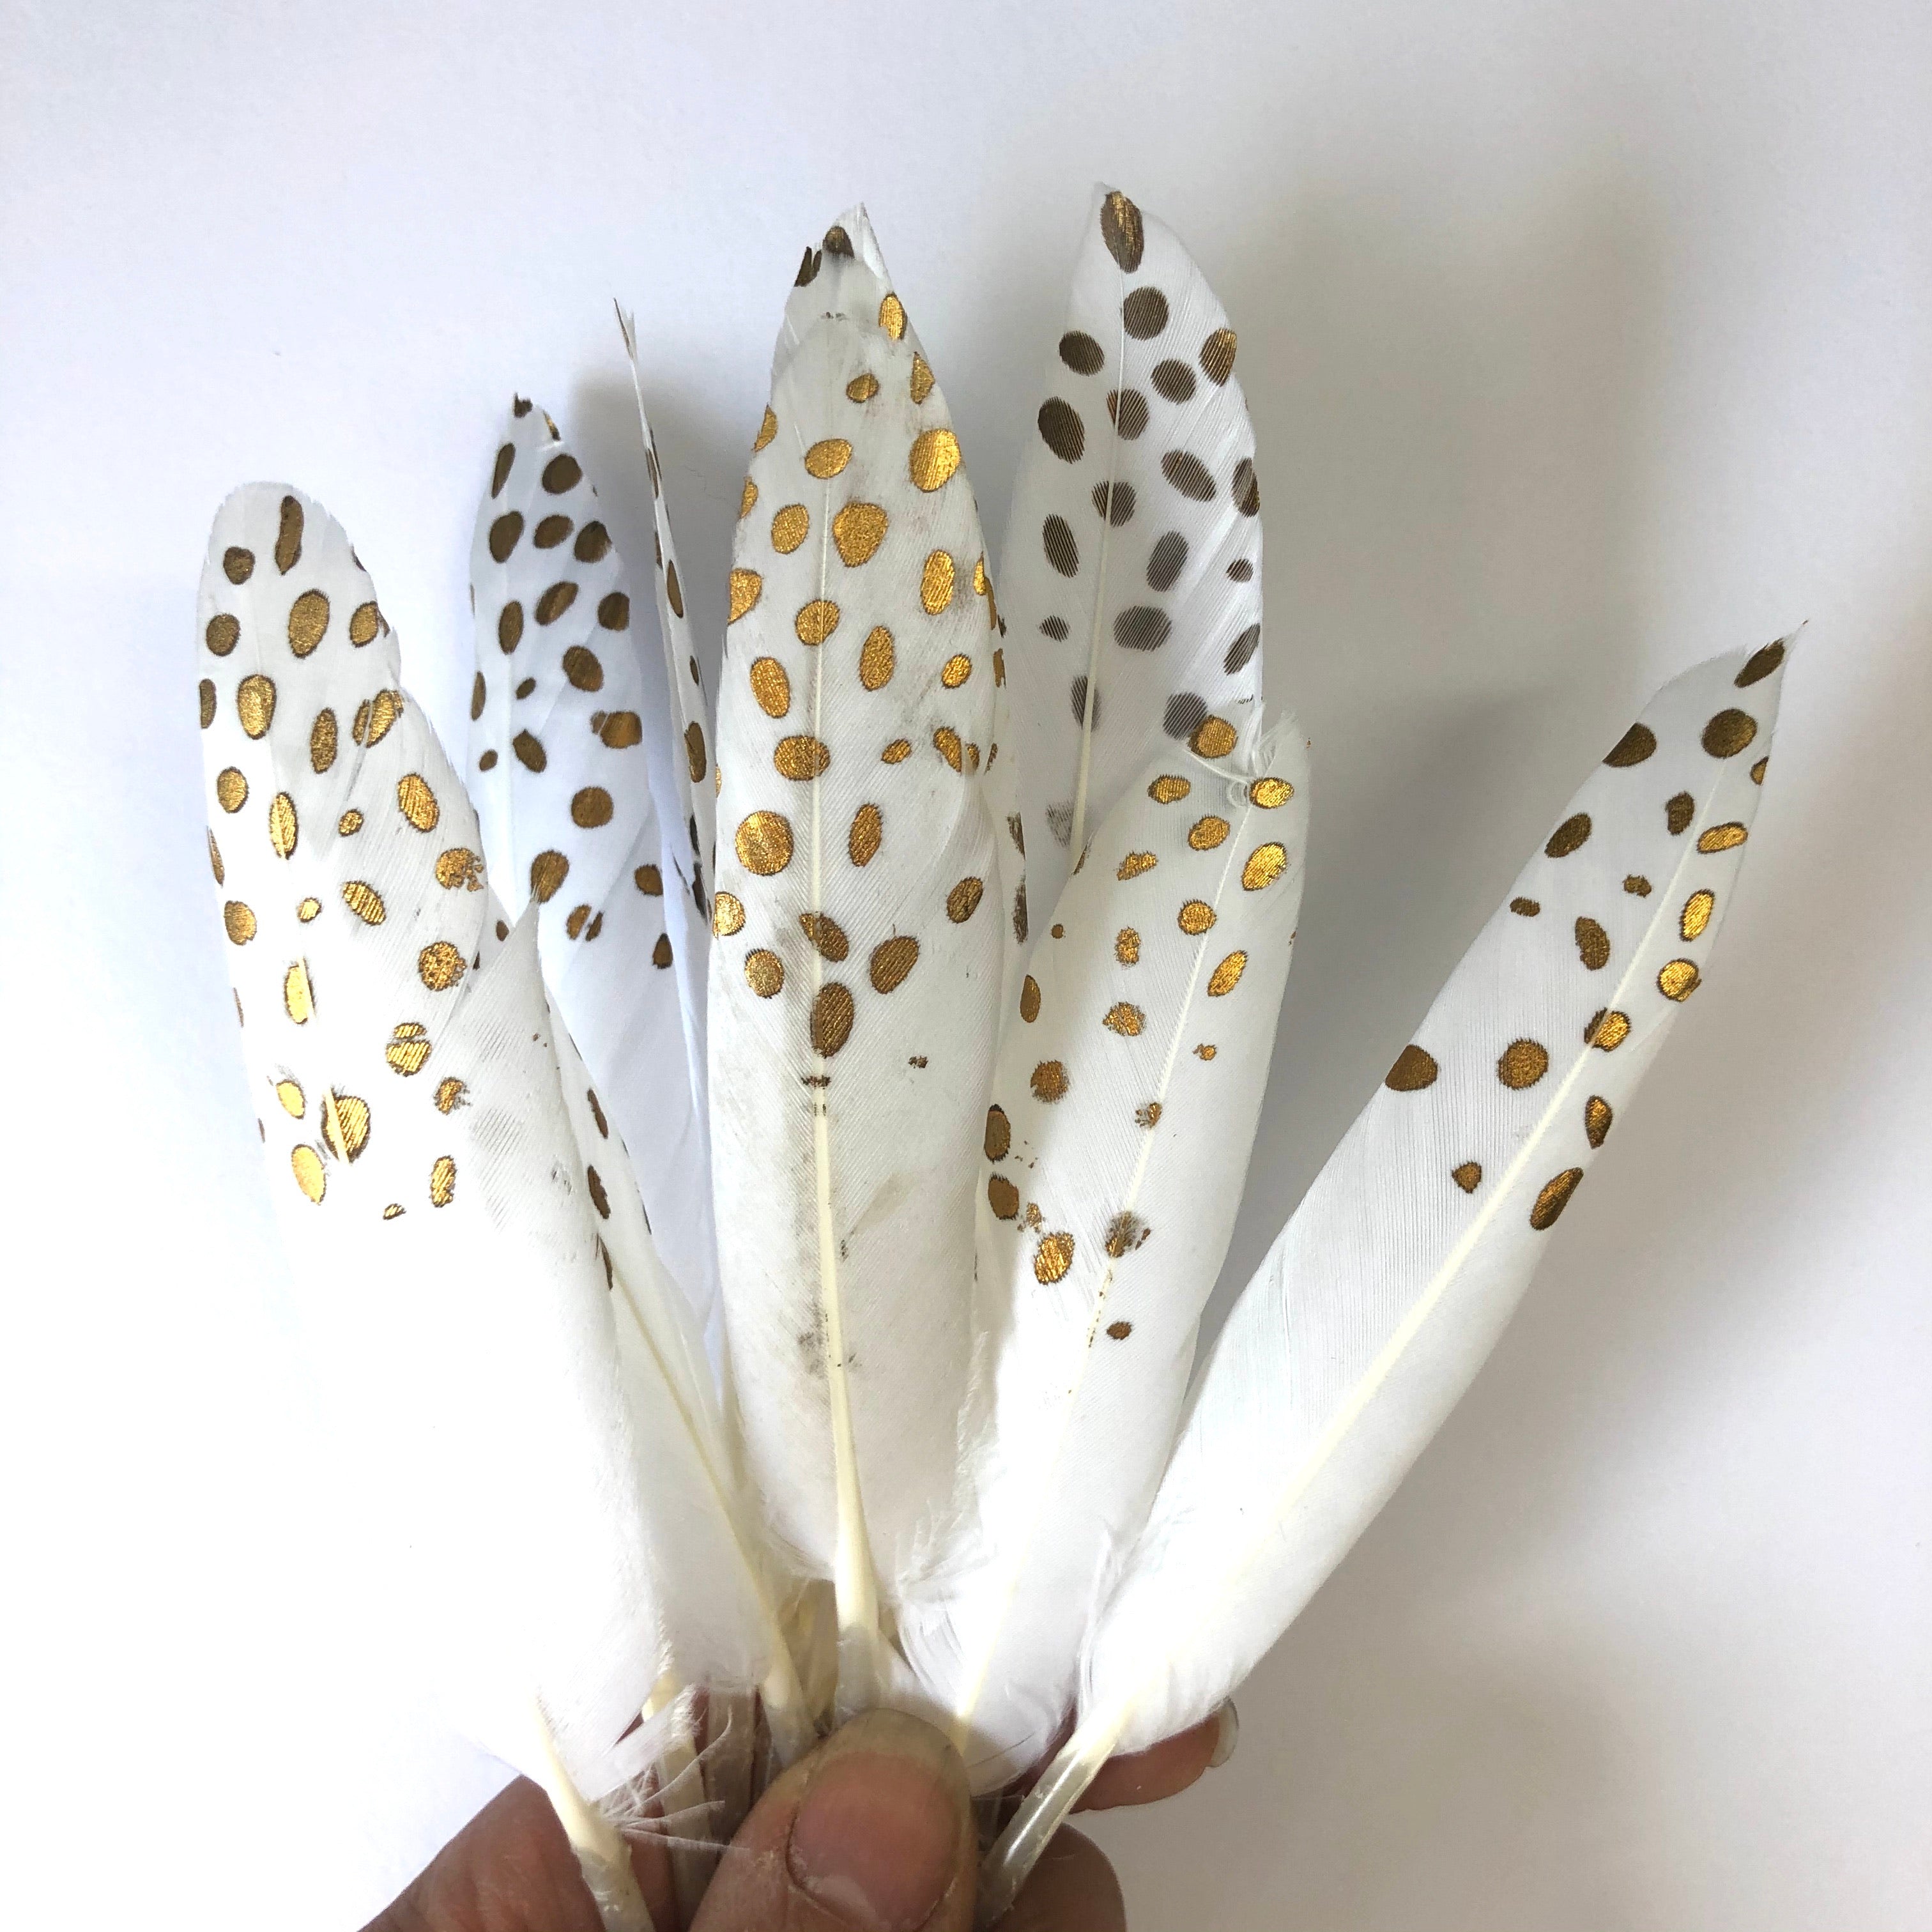 Tiny Goose Pointer Printed White Feather Art Craft - Metallic Gold Spots Style 9 x 10 pcs